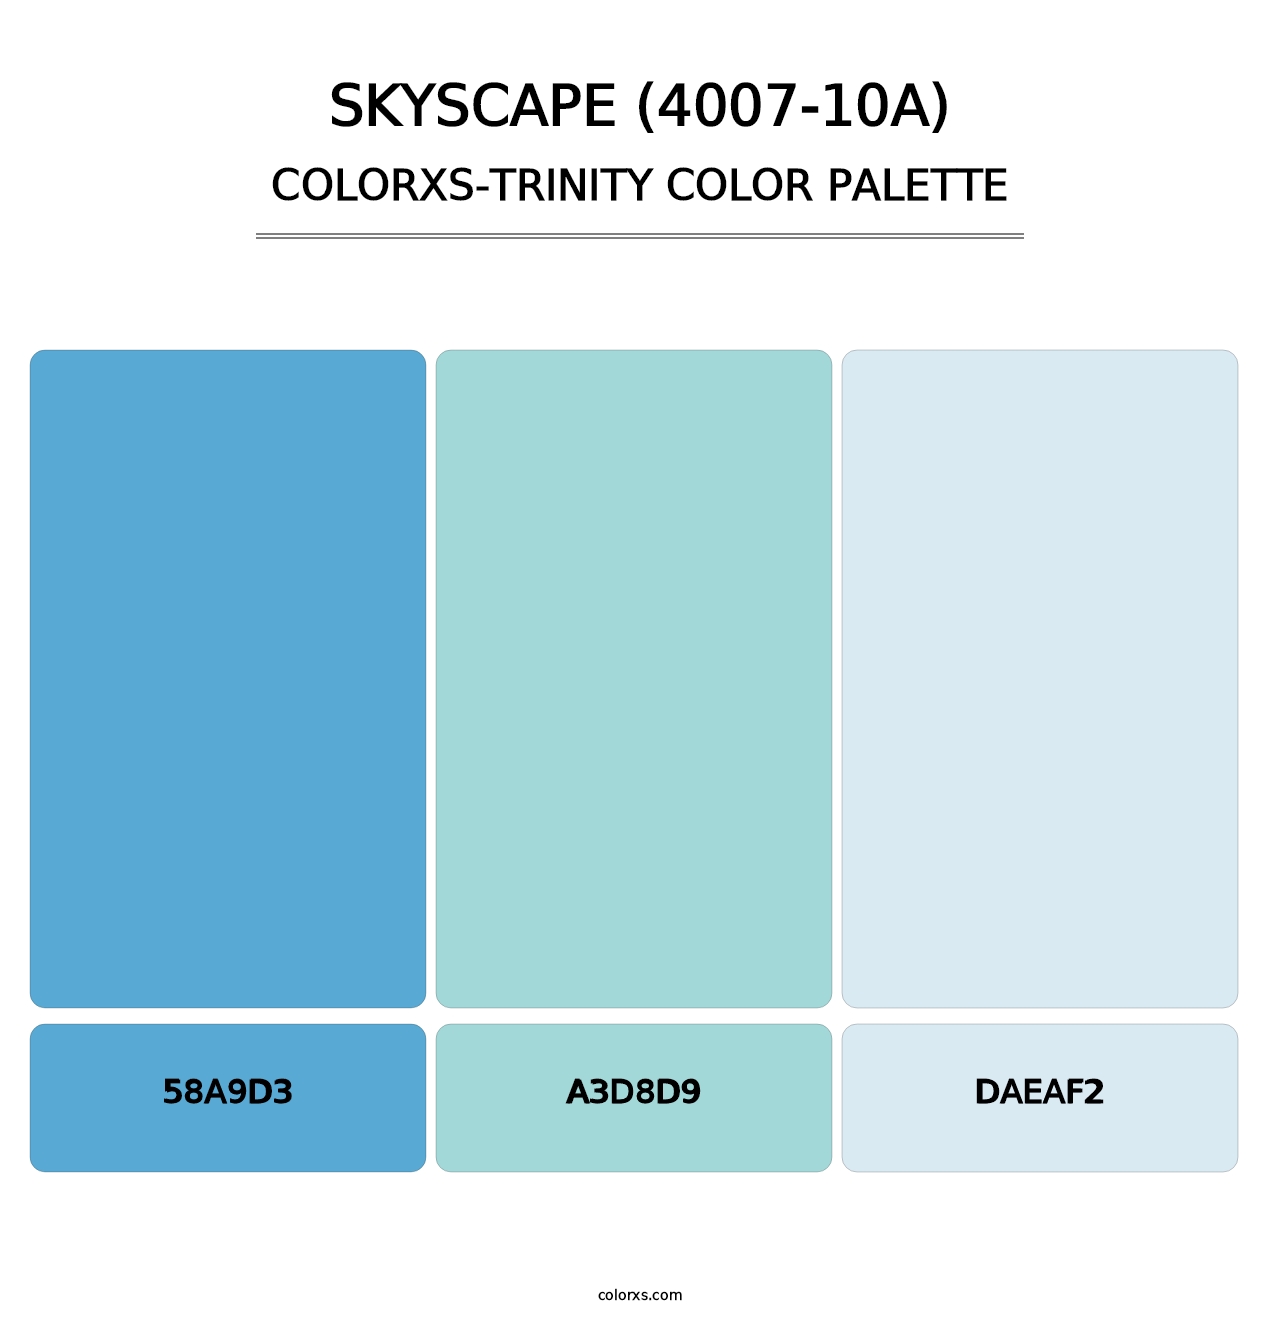 Skyscape (4007-10A) - Colorxs Trinity Palette